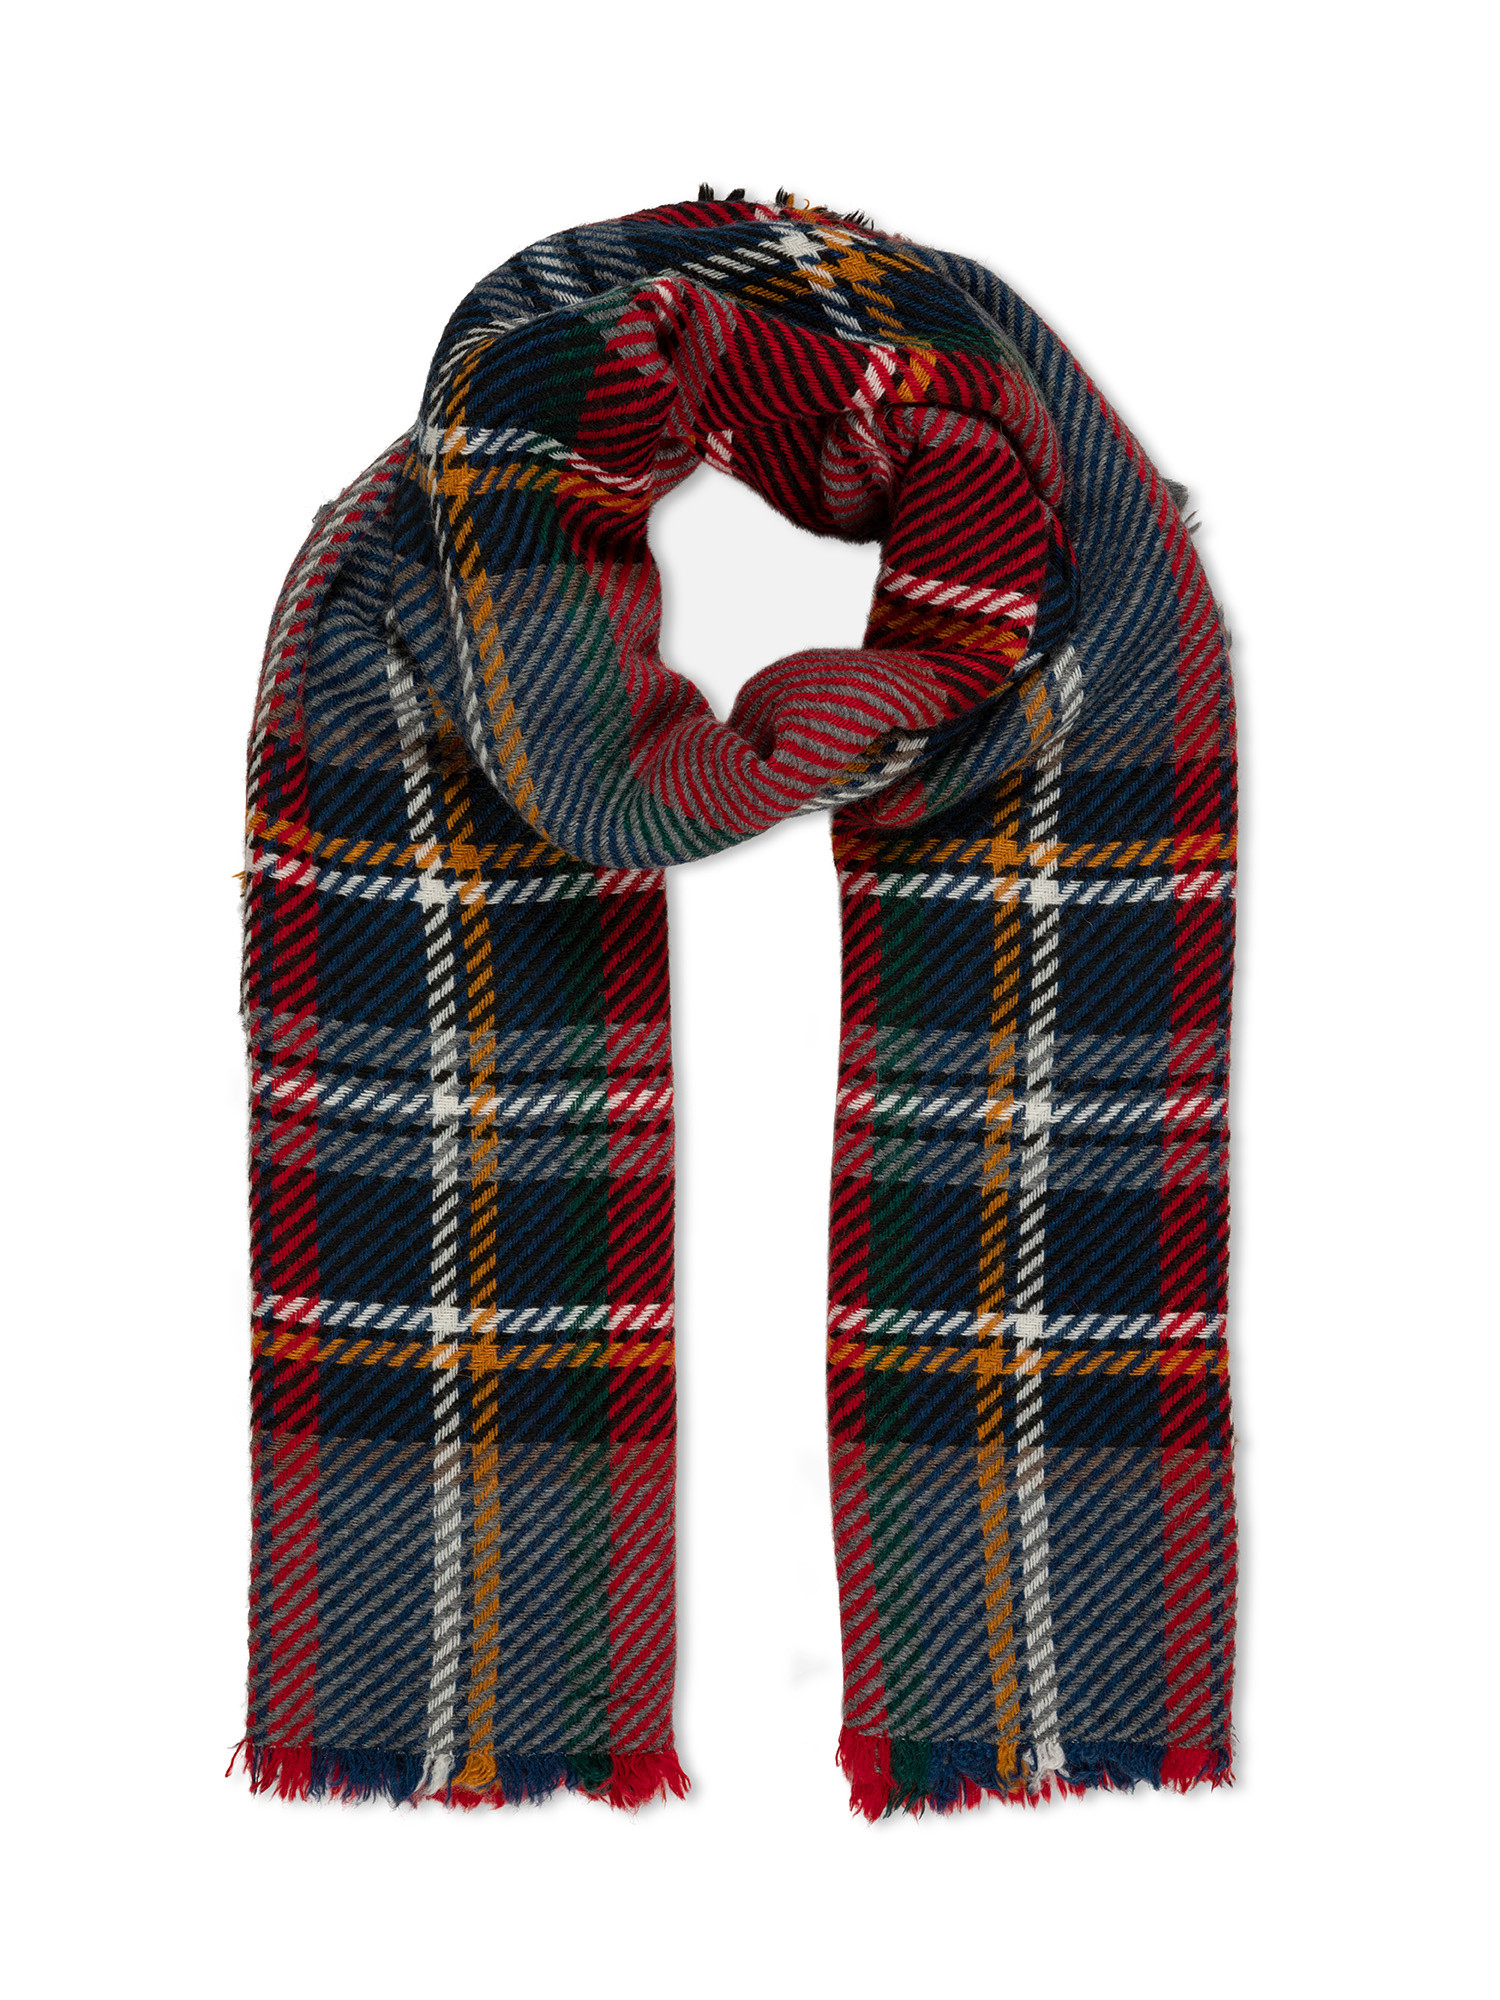 Luca D'Altieri - Scottish scarf, Red, large image number 0